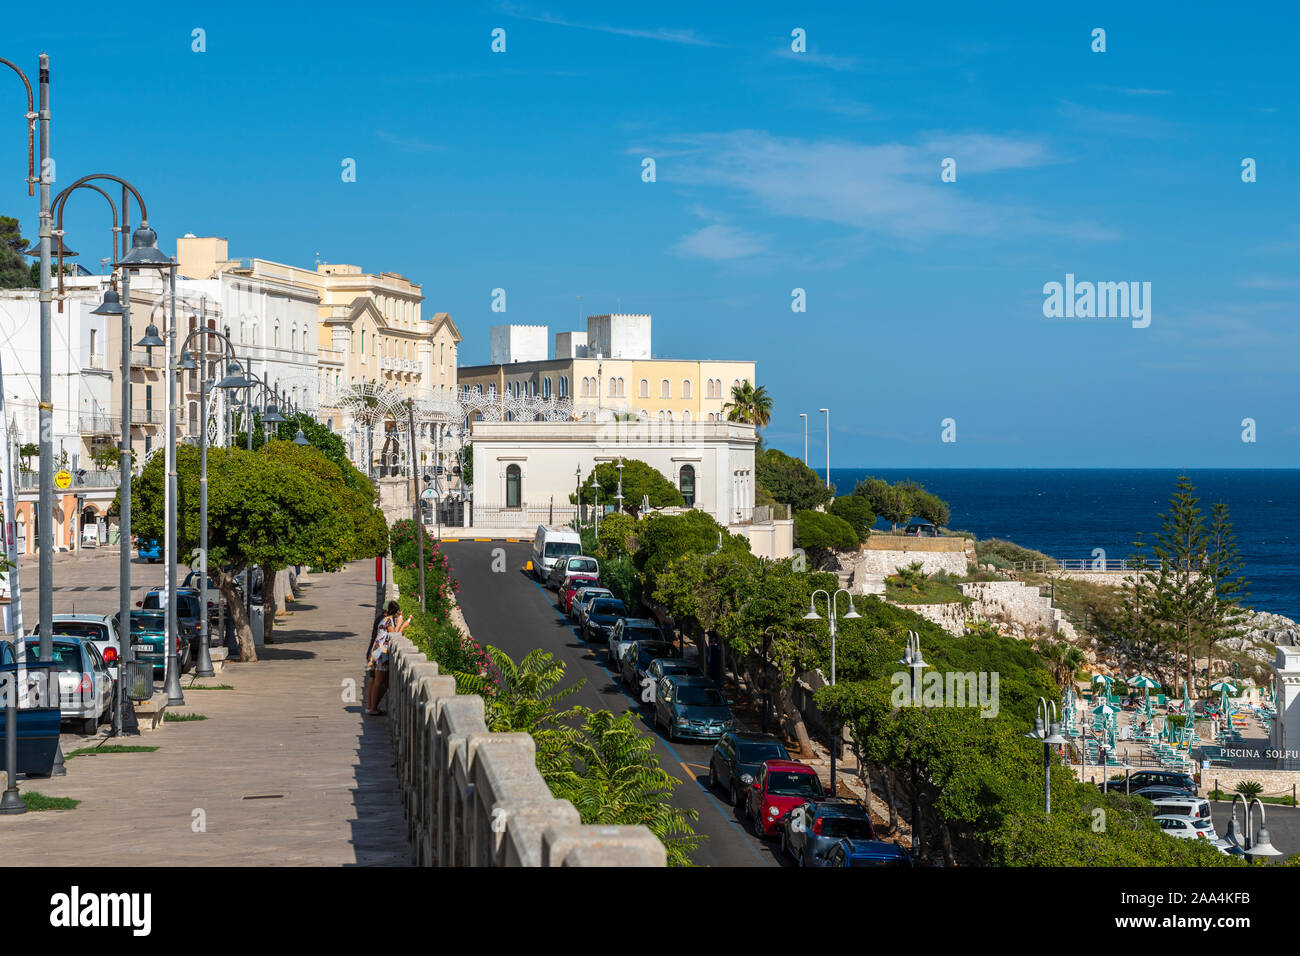 View along Via Roma on the seafront at Santa Cesarea Terme on the Adriatic Coast of Apulia (Puglia) in Southern Italy Stock Photo